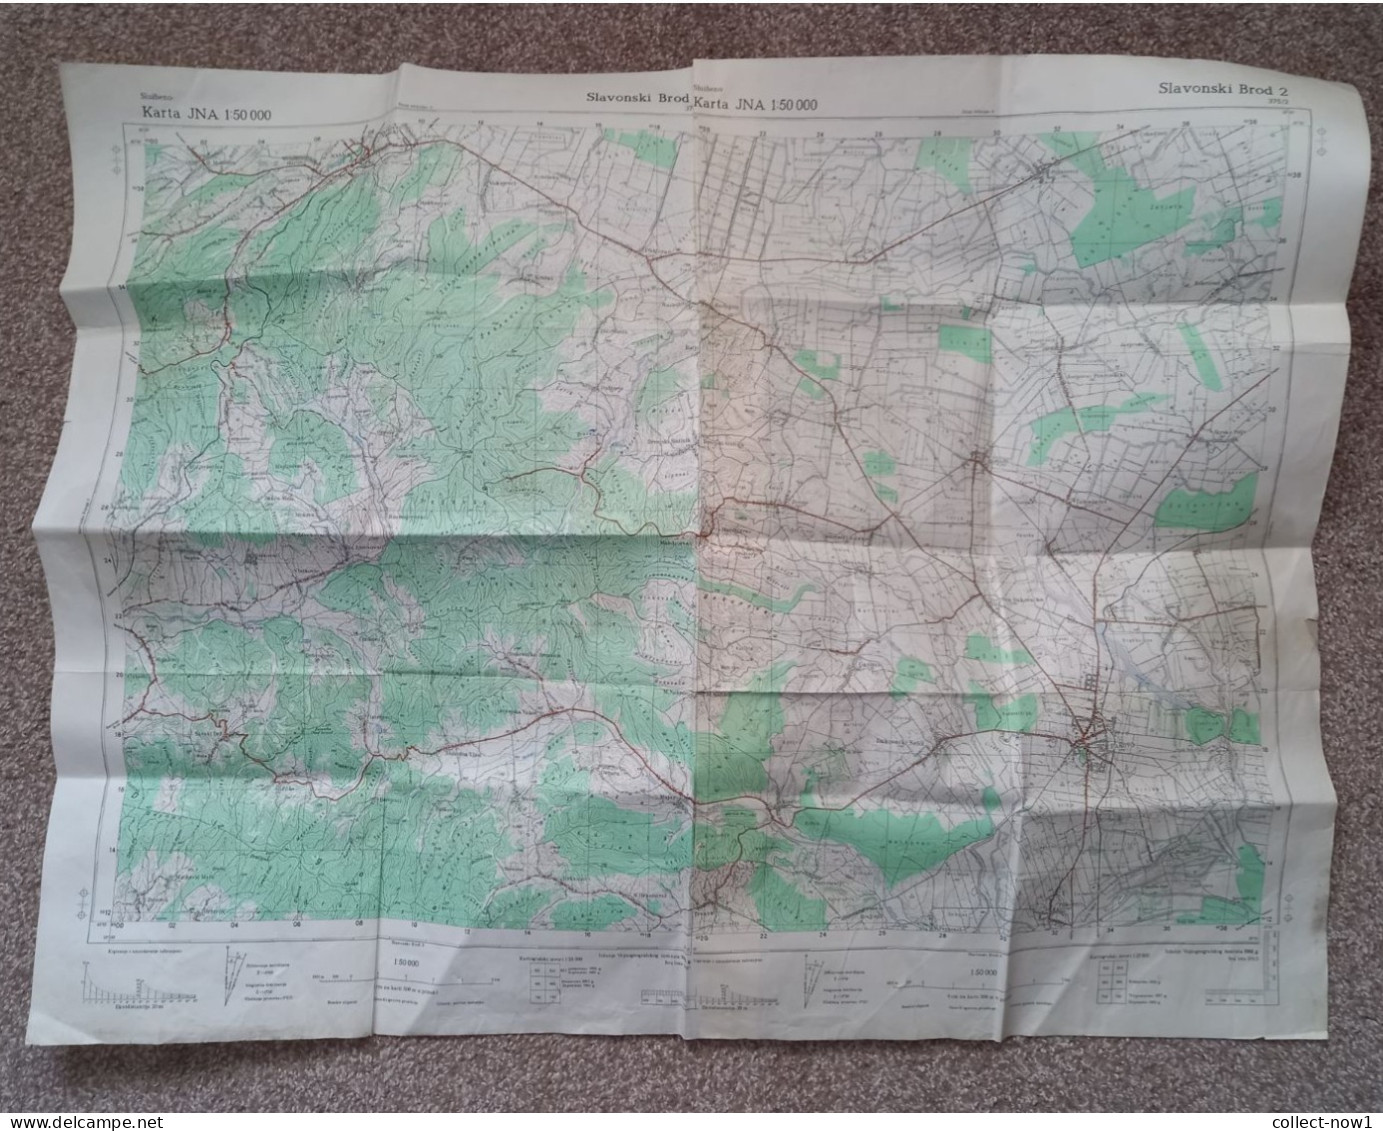 Topographical Maps - Croatia / Slavonski Brod - JNA YUGOSLAVIA ARMY MAP MILITARY CHART PLAN - Topographische Karten